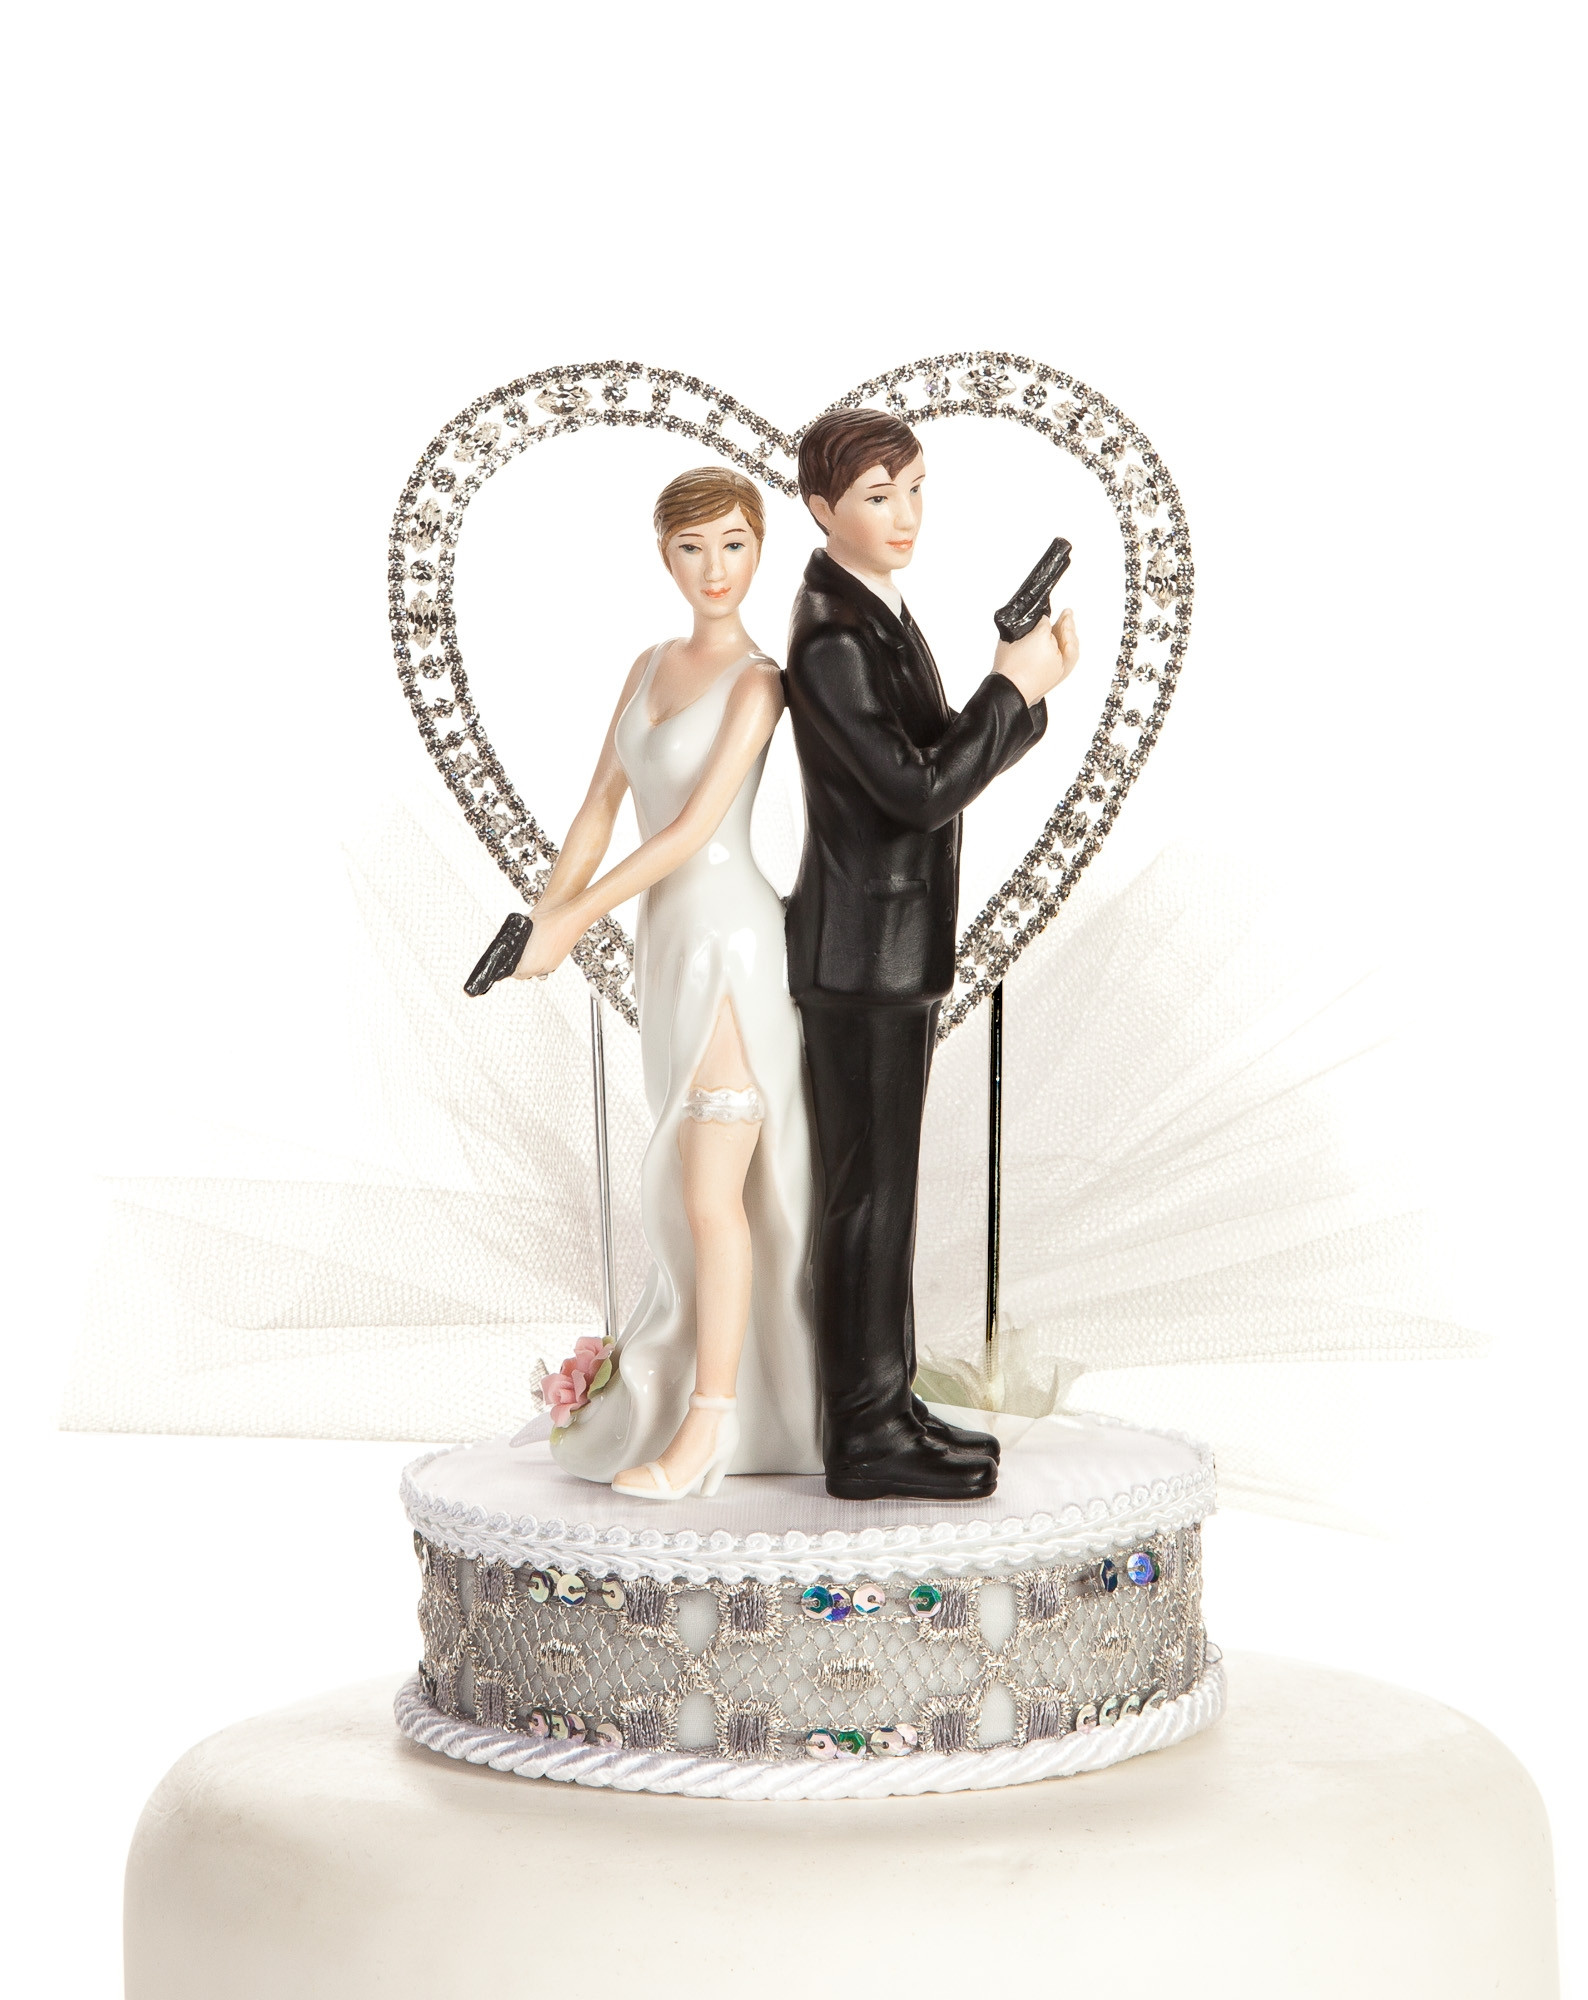 Wedding Cakes Toppers
 "Super y Spy" Rhinestone Heart Wedding Cake Topper